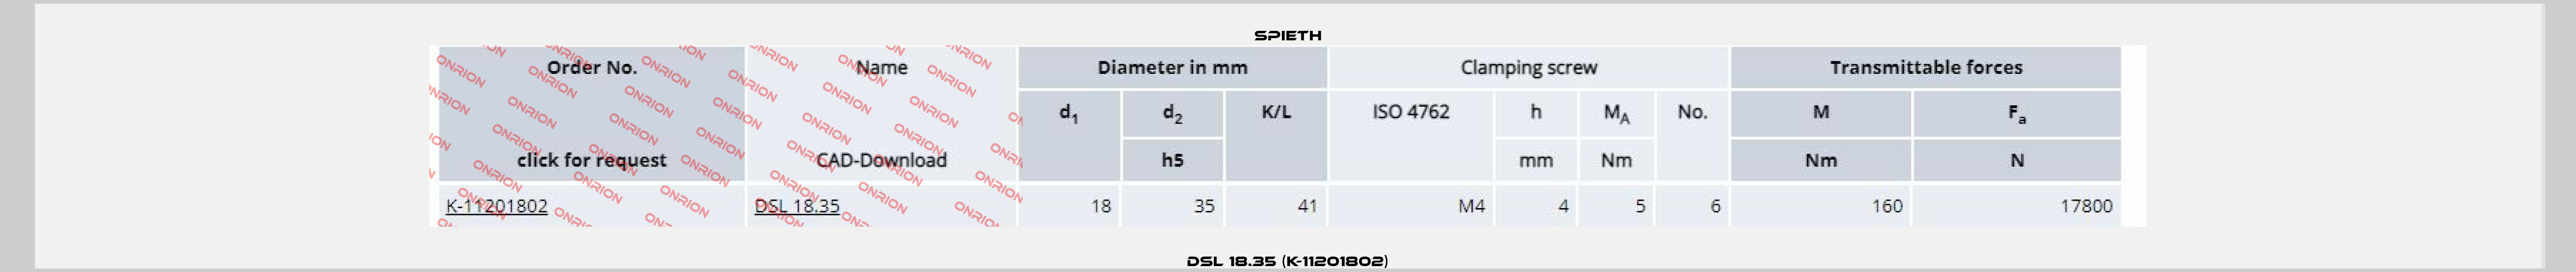 DSL 18.35 (K-11201802) Spieth